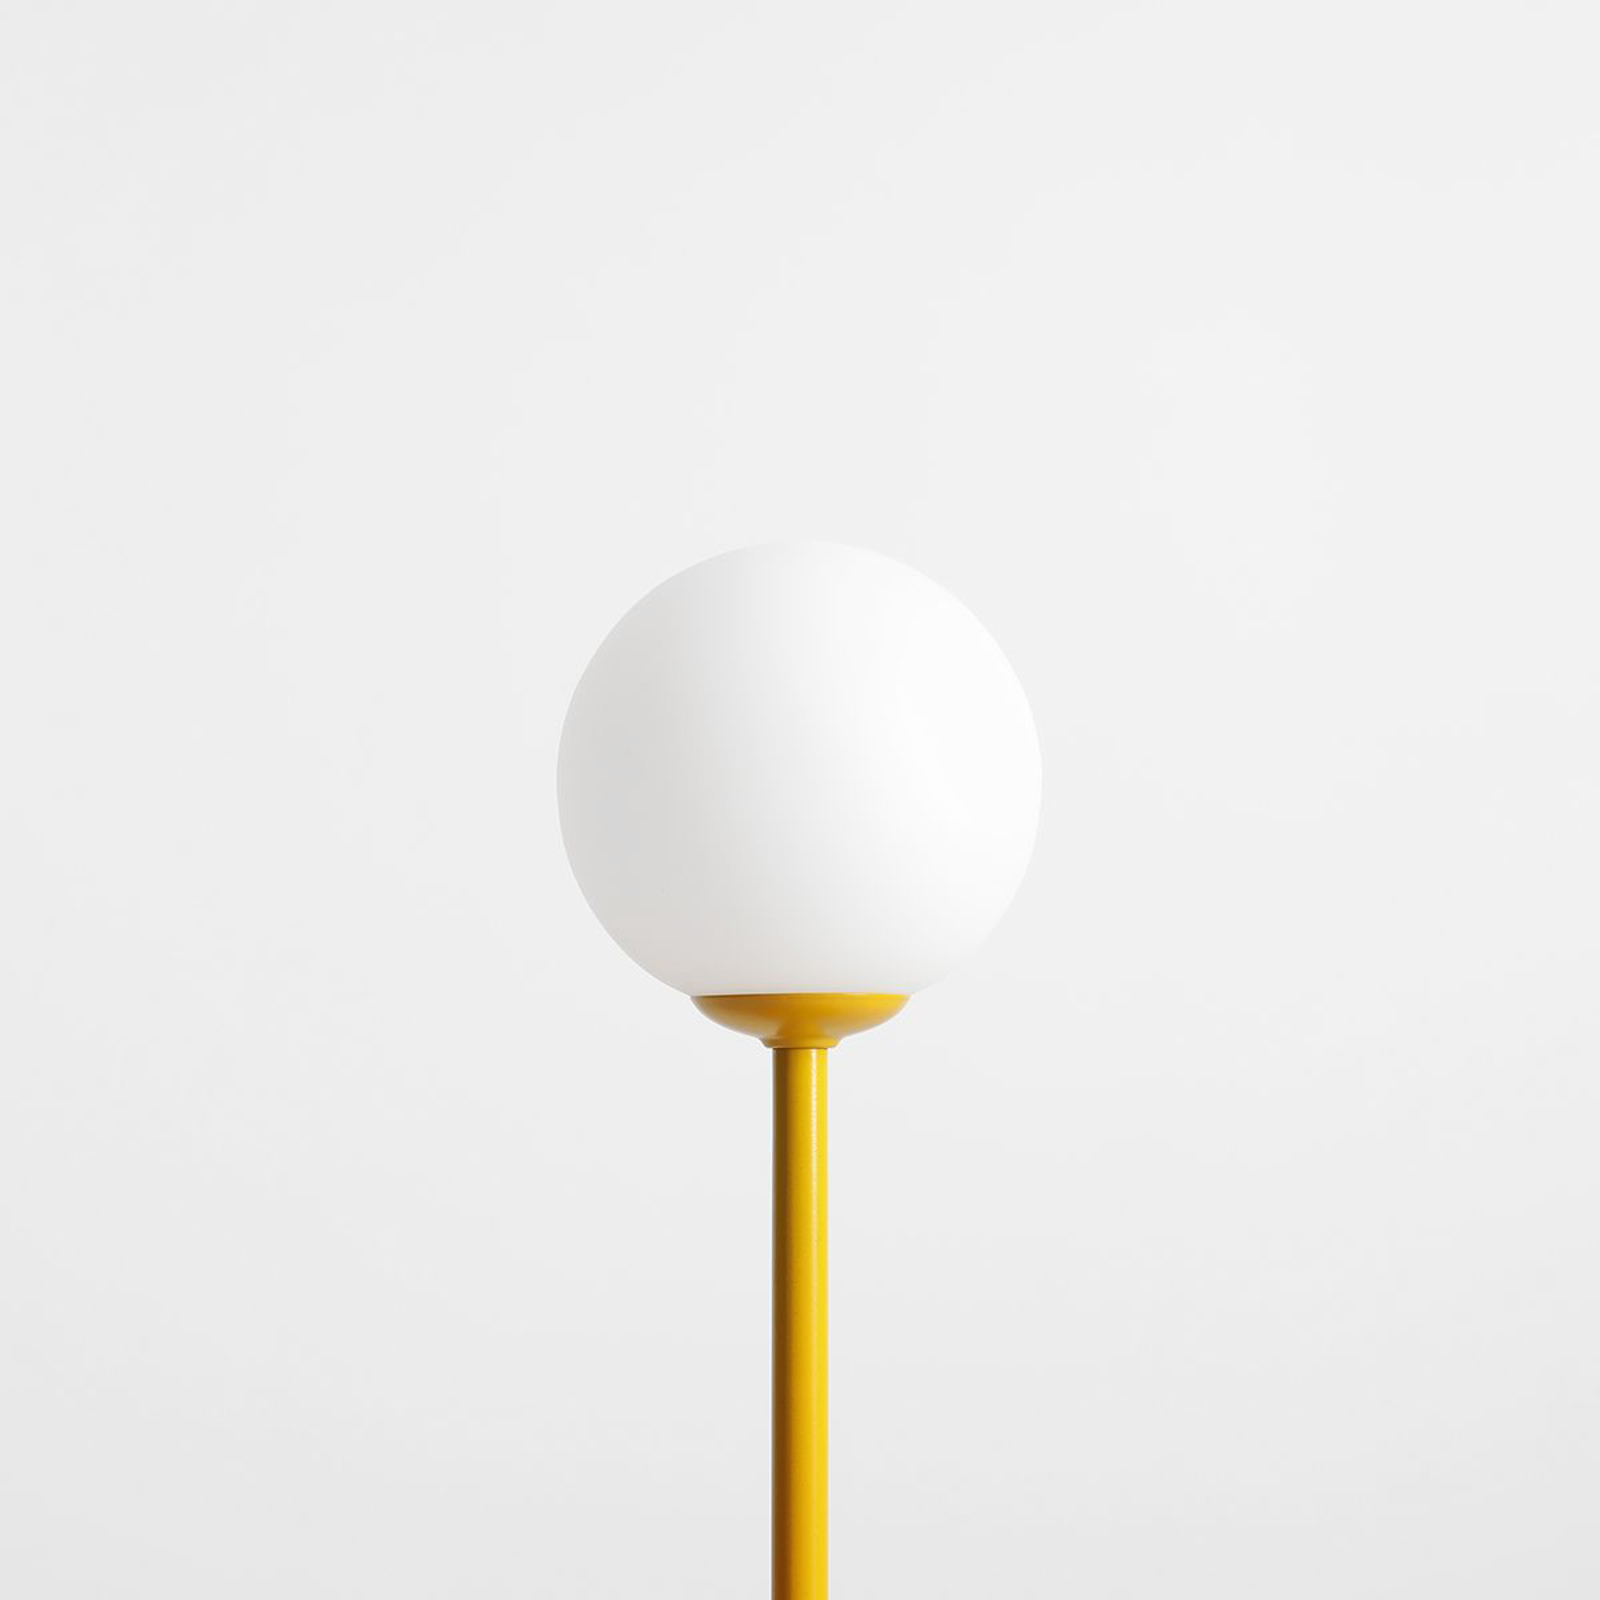 Stolní lampa Joel, výška 35 cm, žlutá/bílá